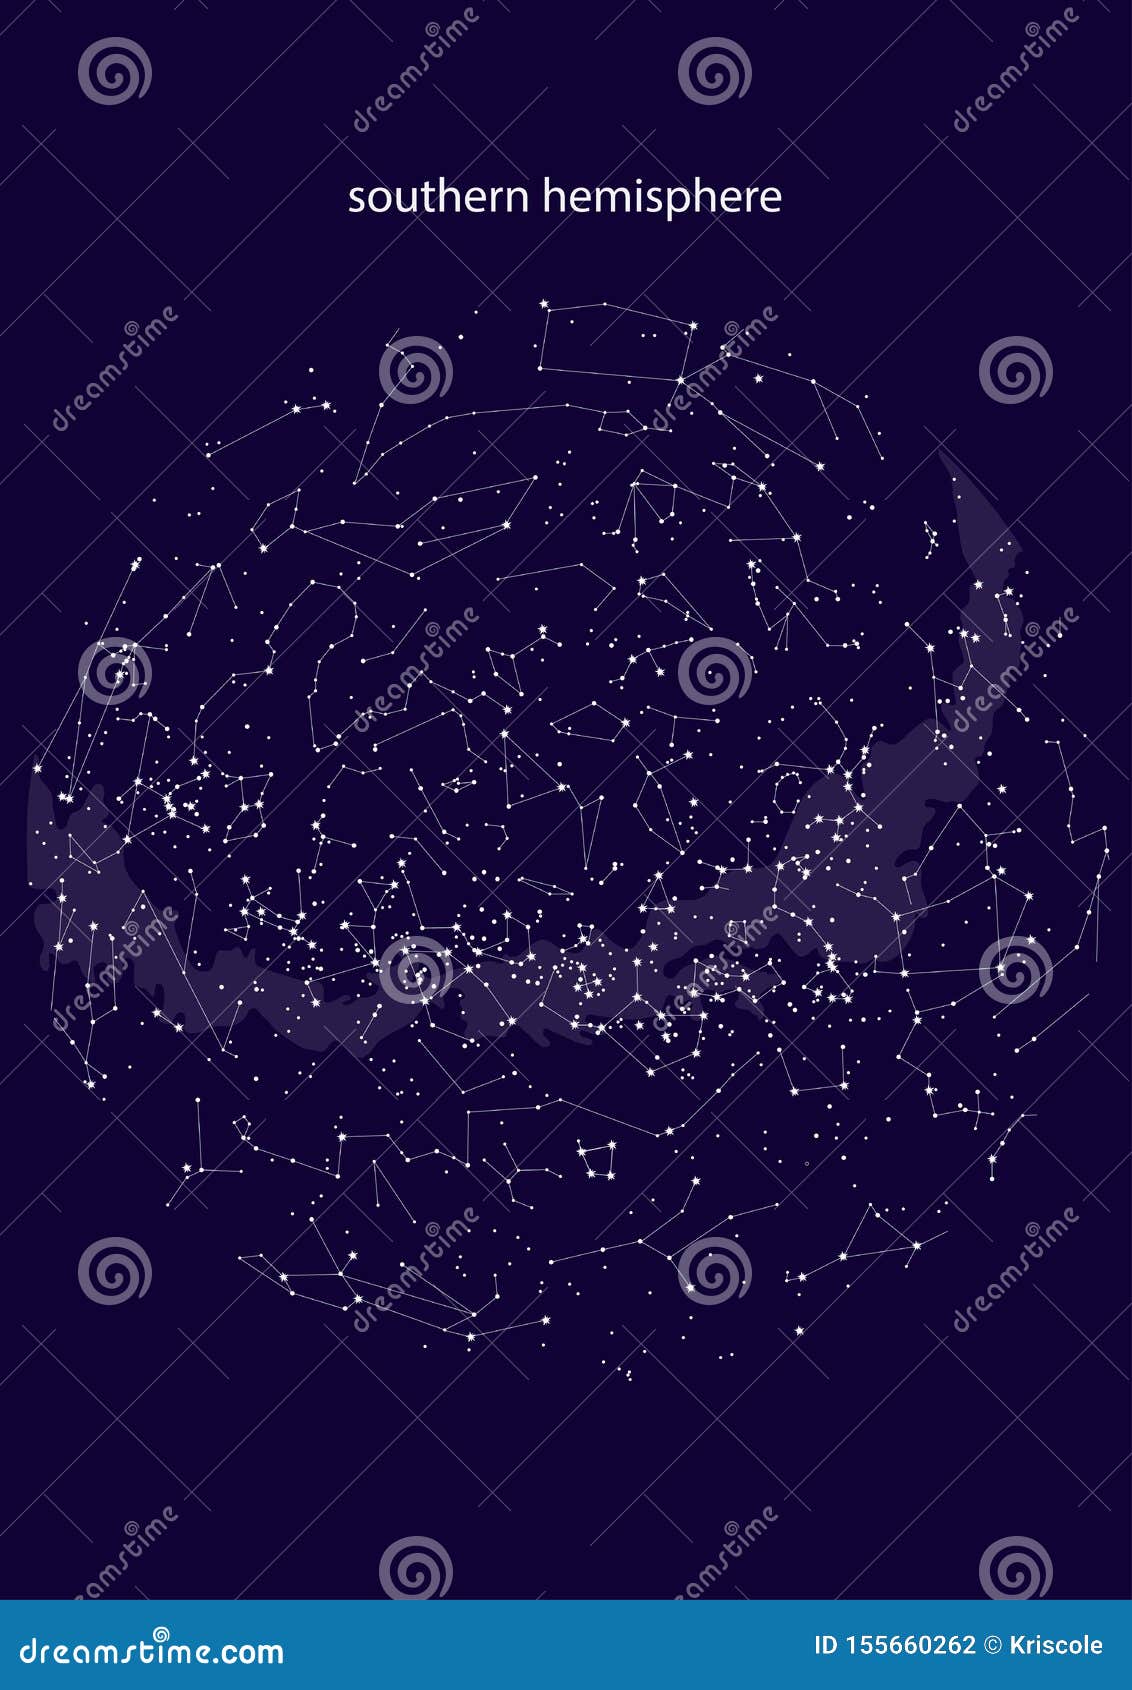 Star Chart Astronomy